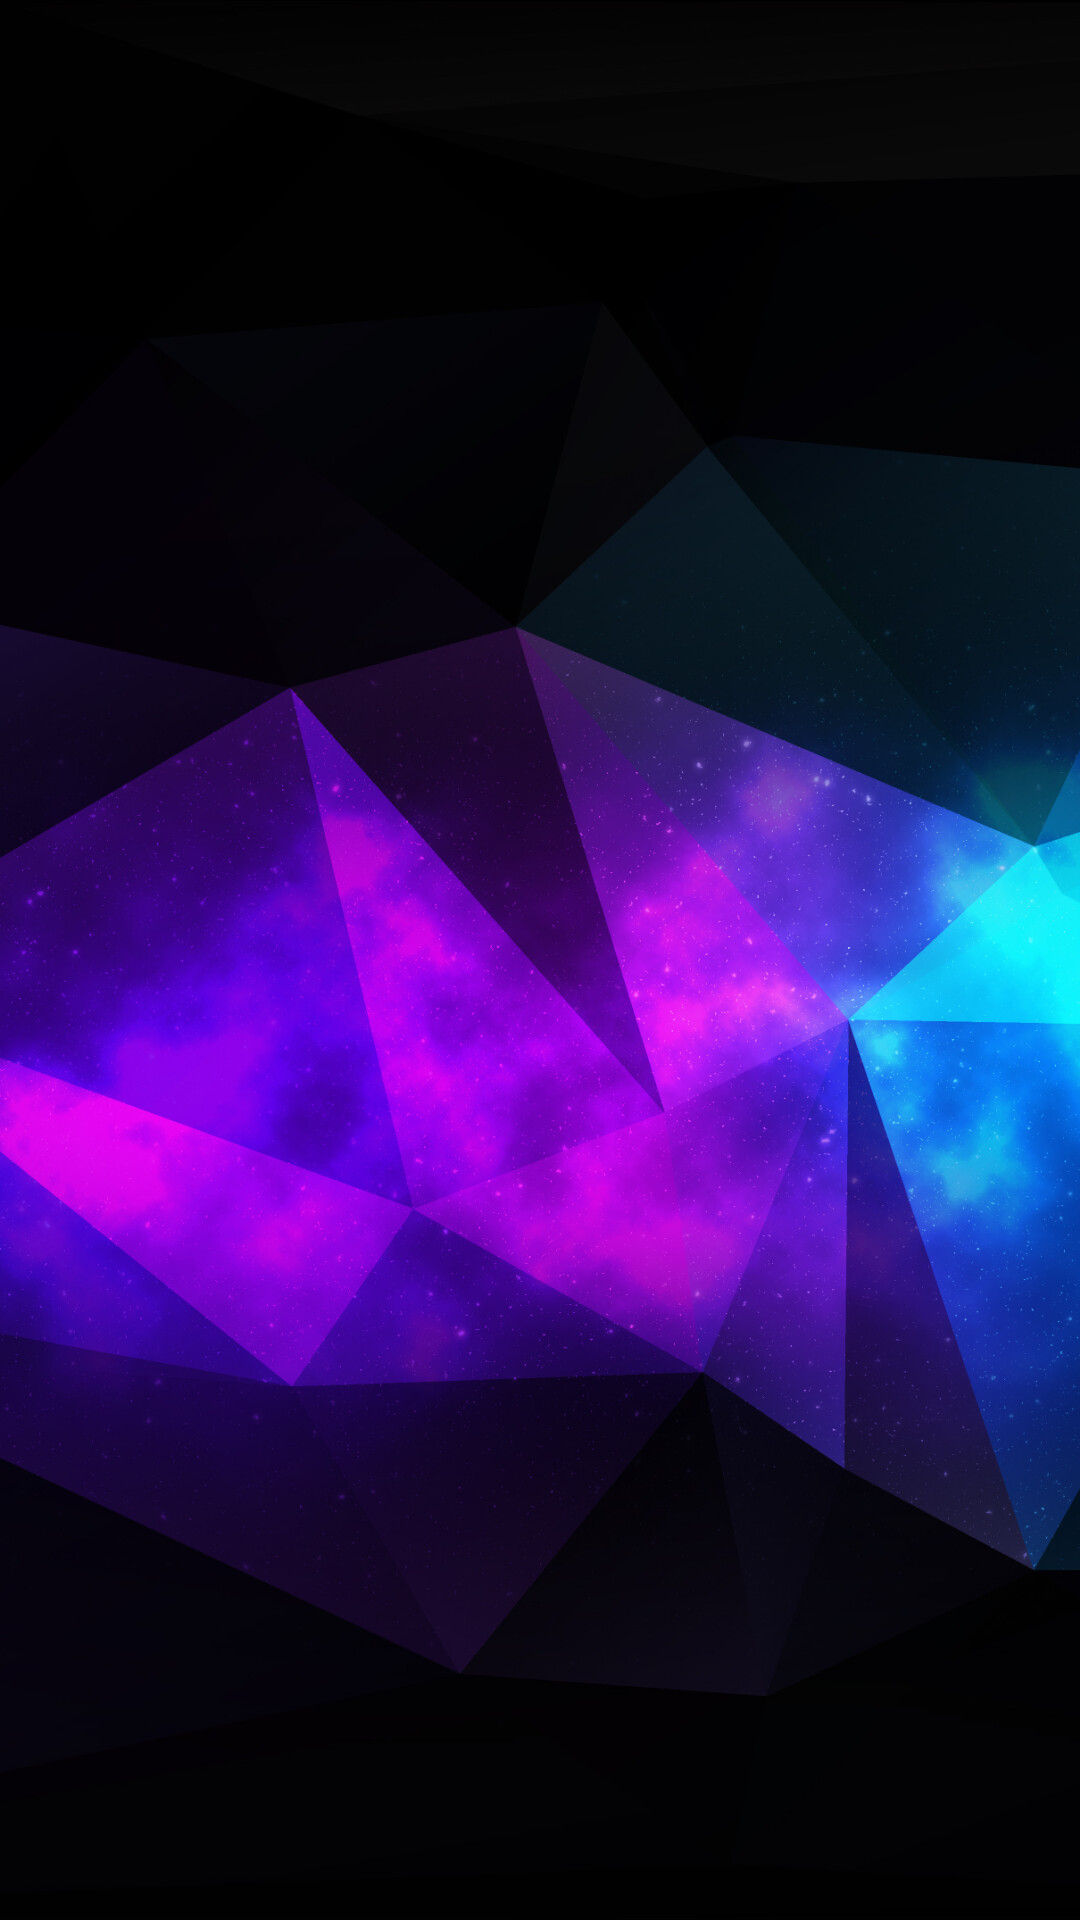 Geometry: Nebula, Low poly, Isosceles triangles, Sharp angles. 1080x1920 Full HD Wallpaper.